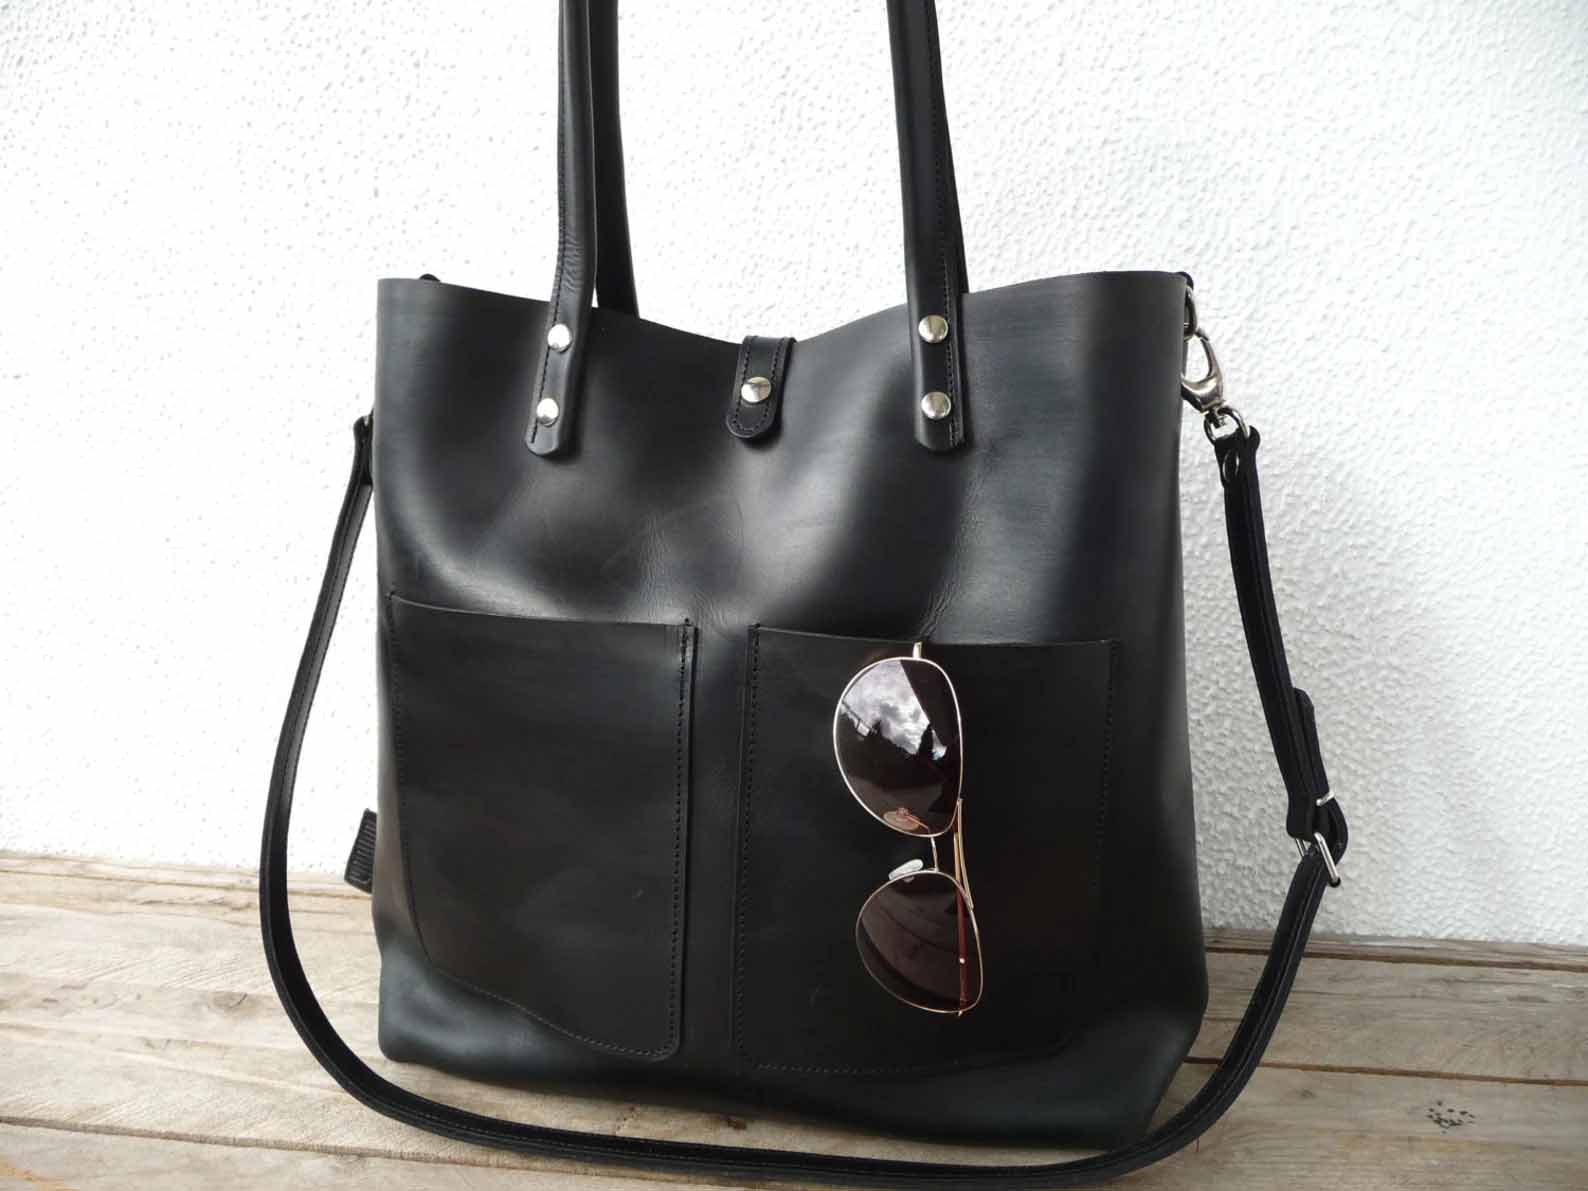 Modern Gift Idea - leather tote bag